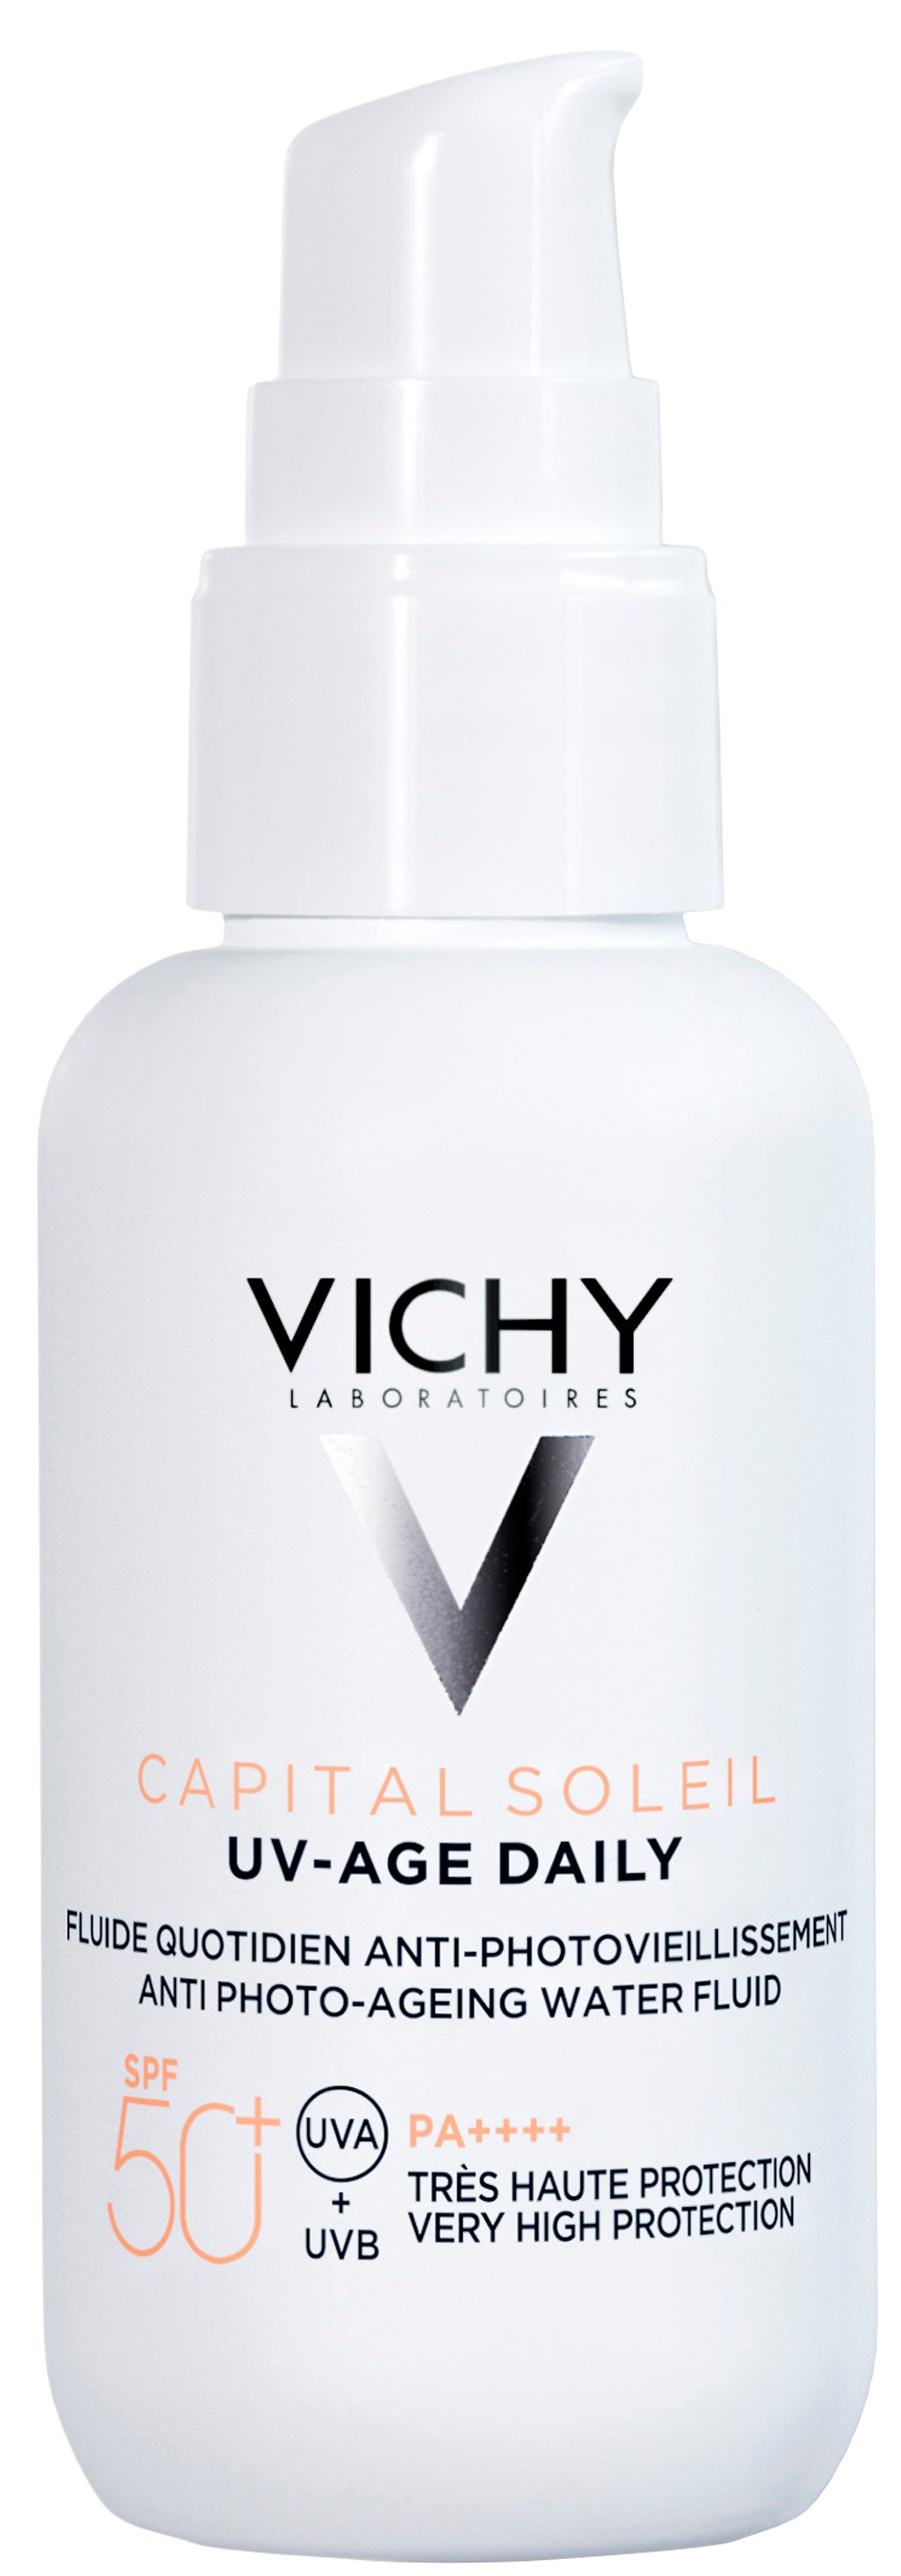 Vichy Capital Soleil UV-age Daily SPF50+ Pa++++